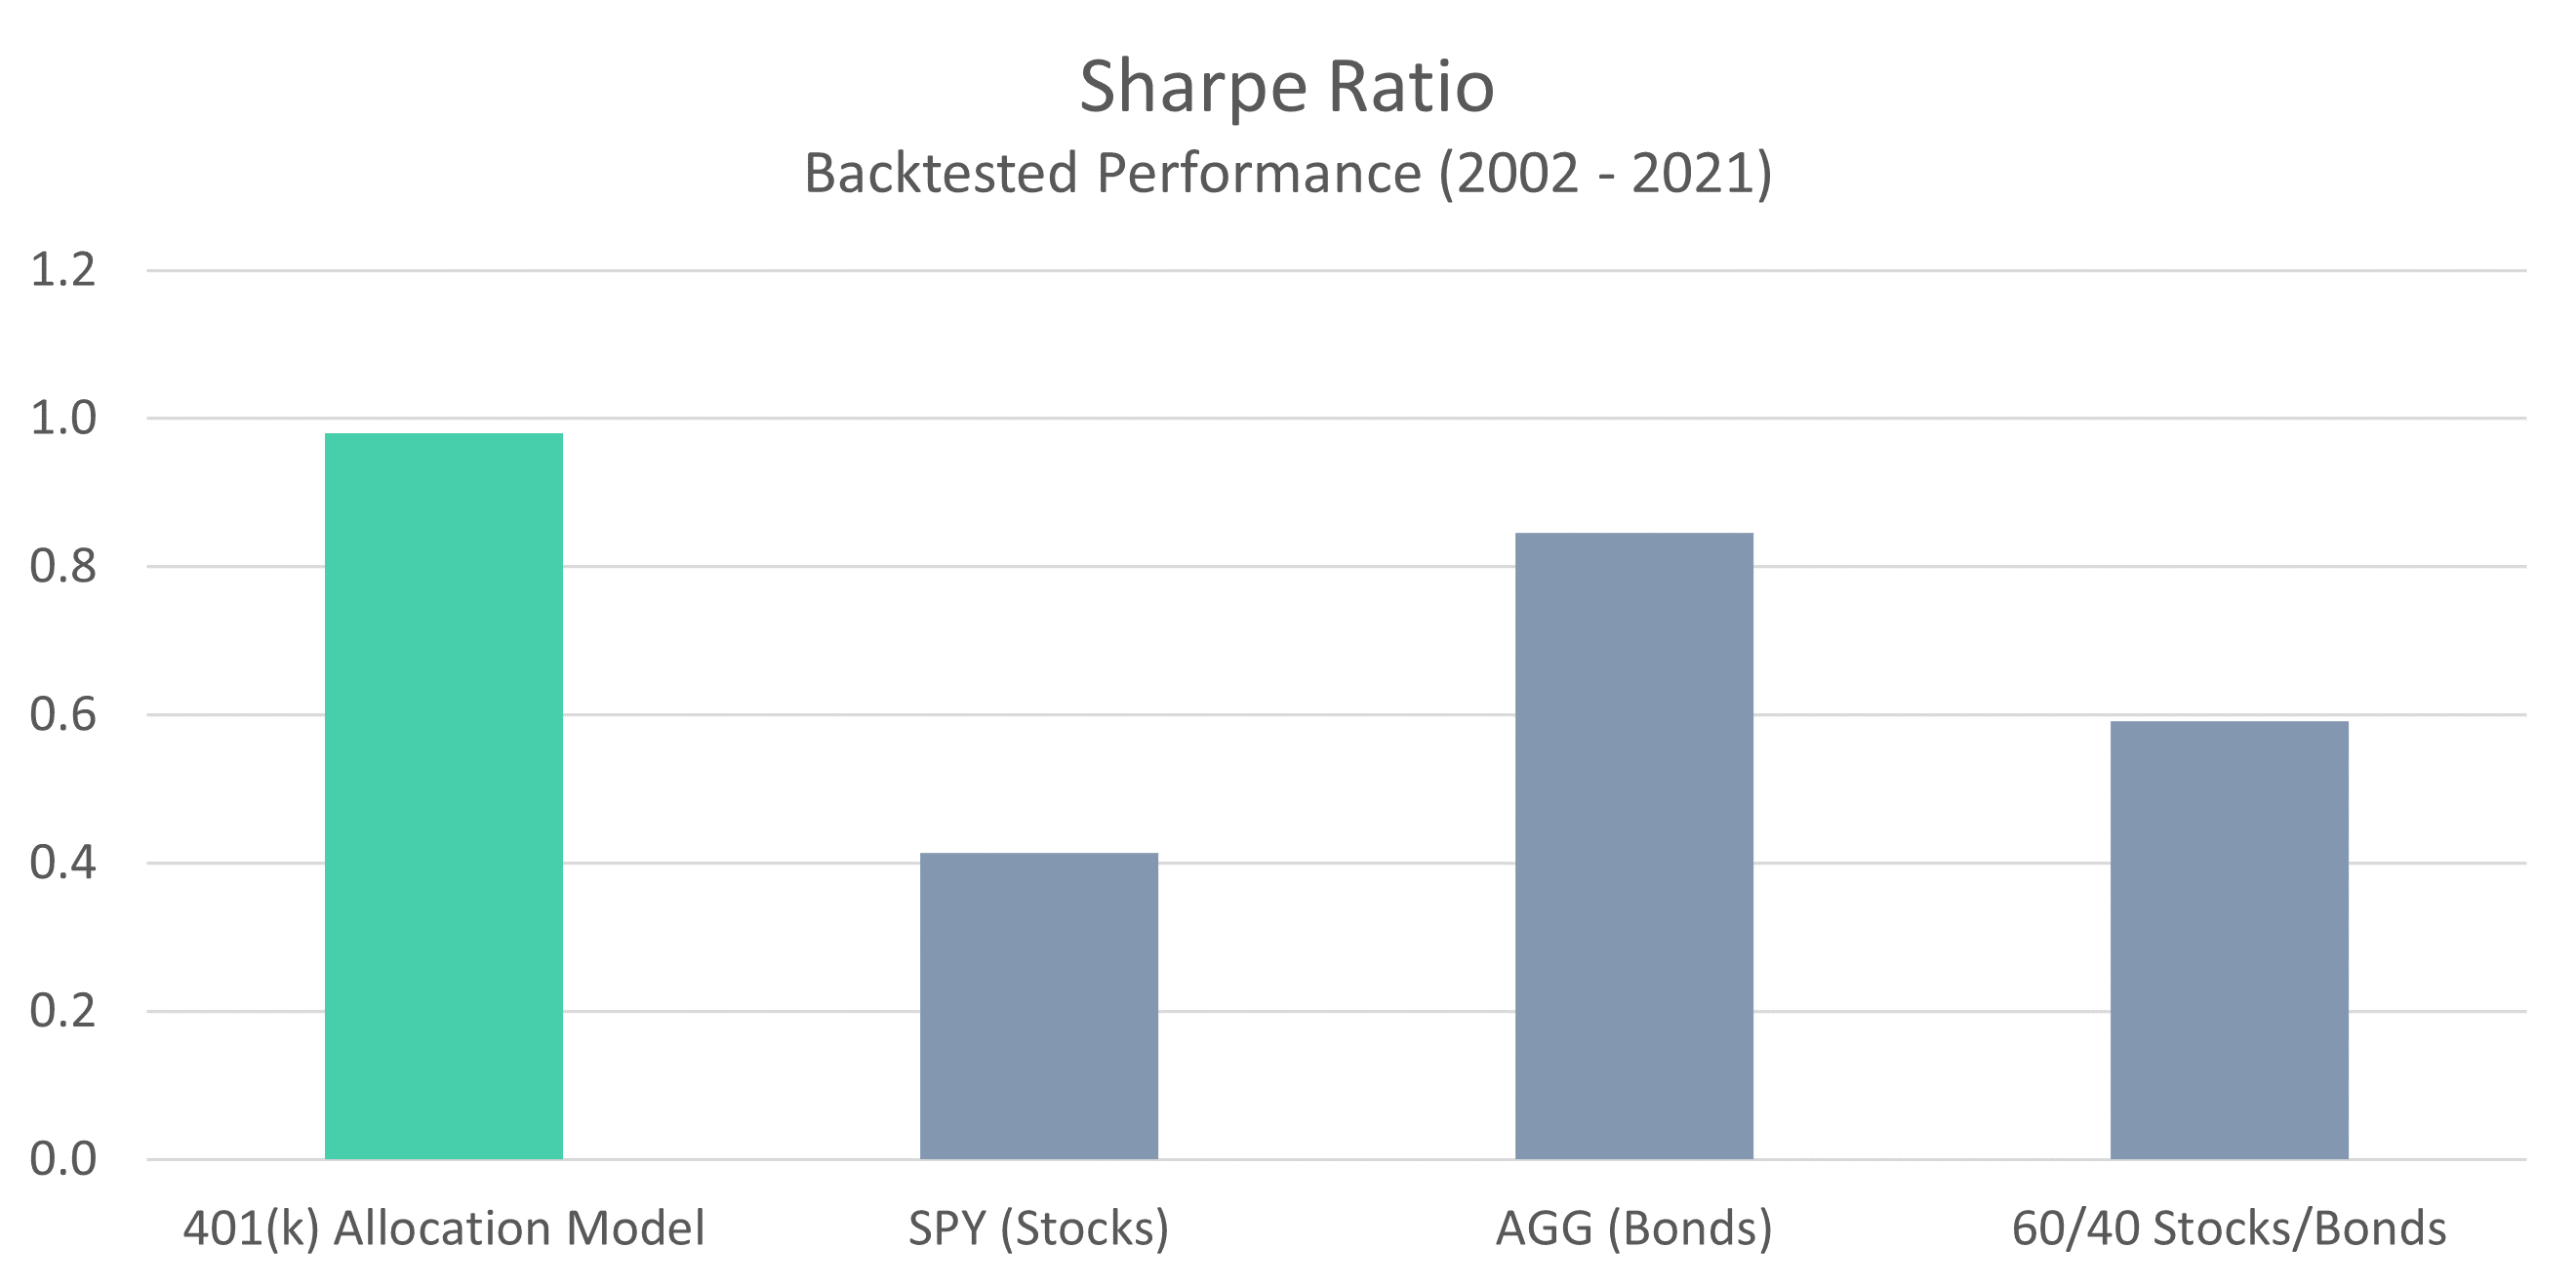 401 Model Sharpe Ratio